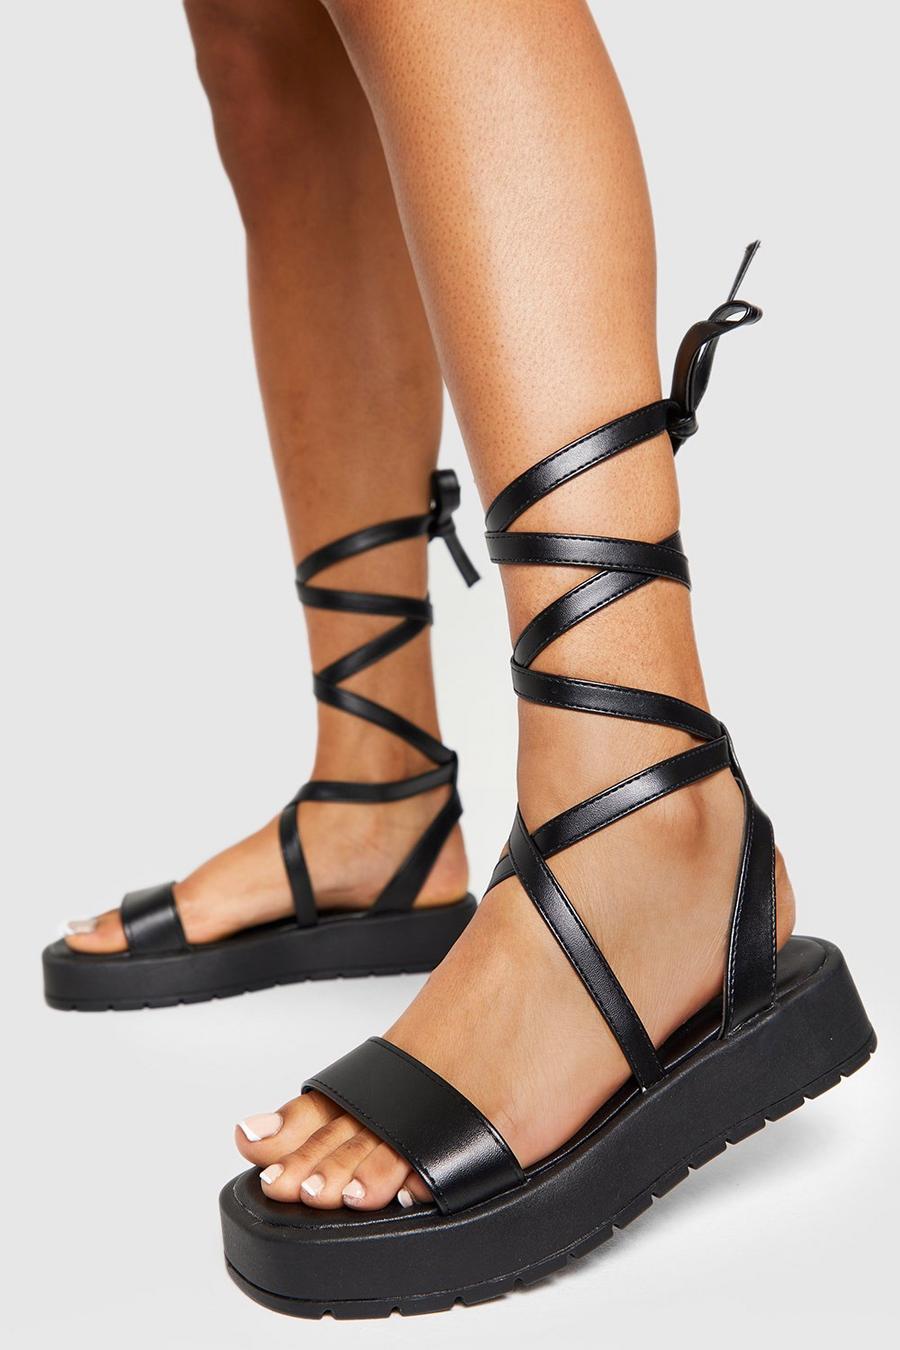 CUTE Size 13+ Women's Sandals for 2021 (+ Wide Widths)